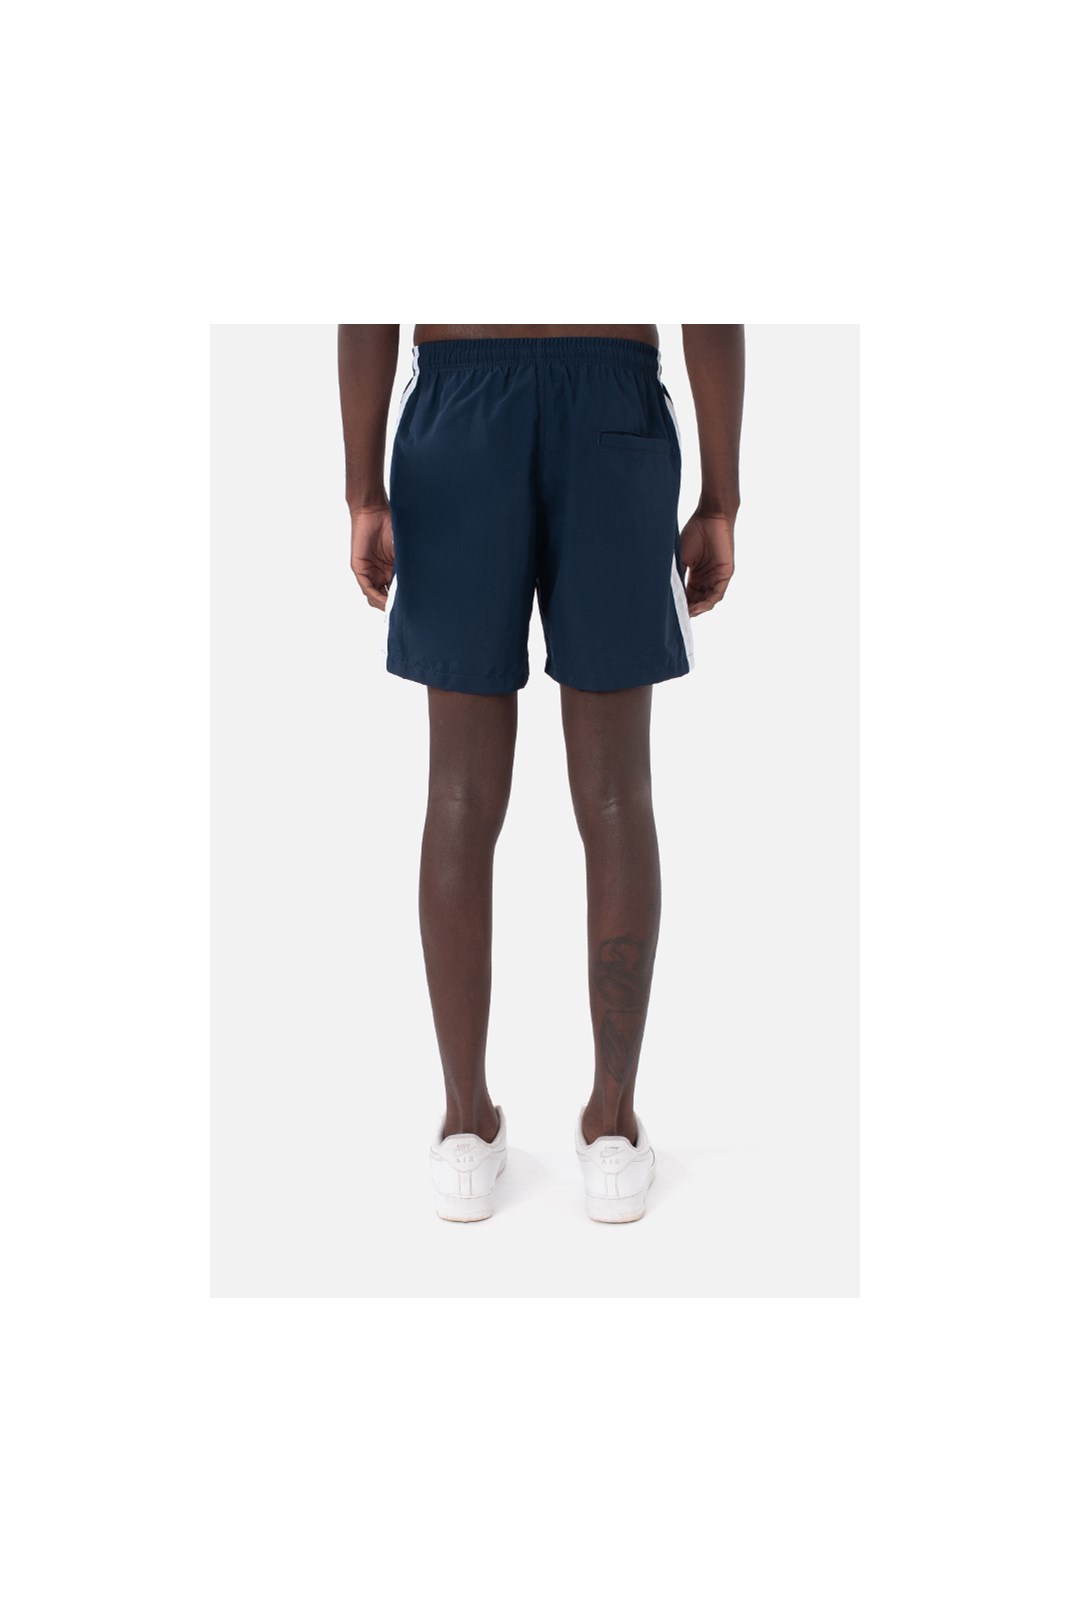 Shorts Approve Classic Azul Marinho V2